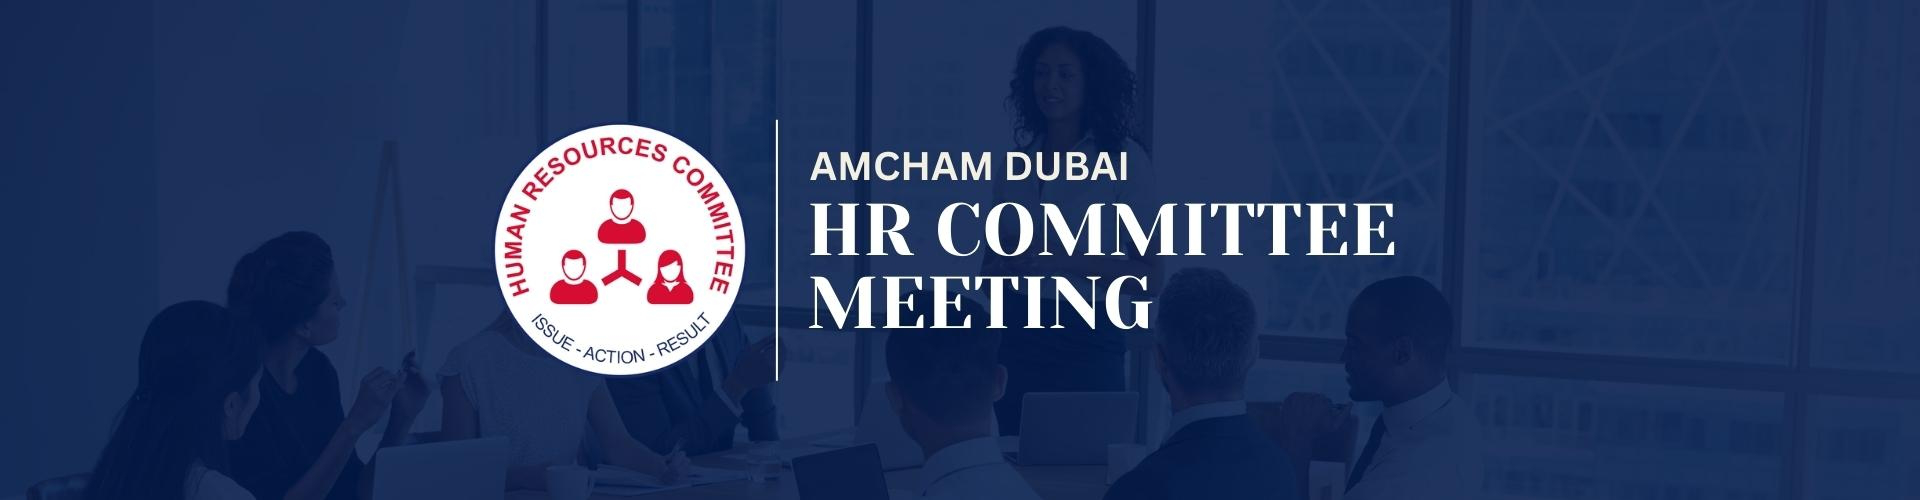 thumbnails AmCham Dubai HR Committee Meeting